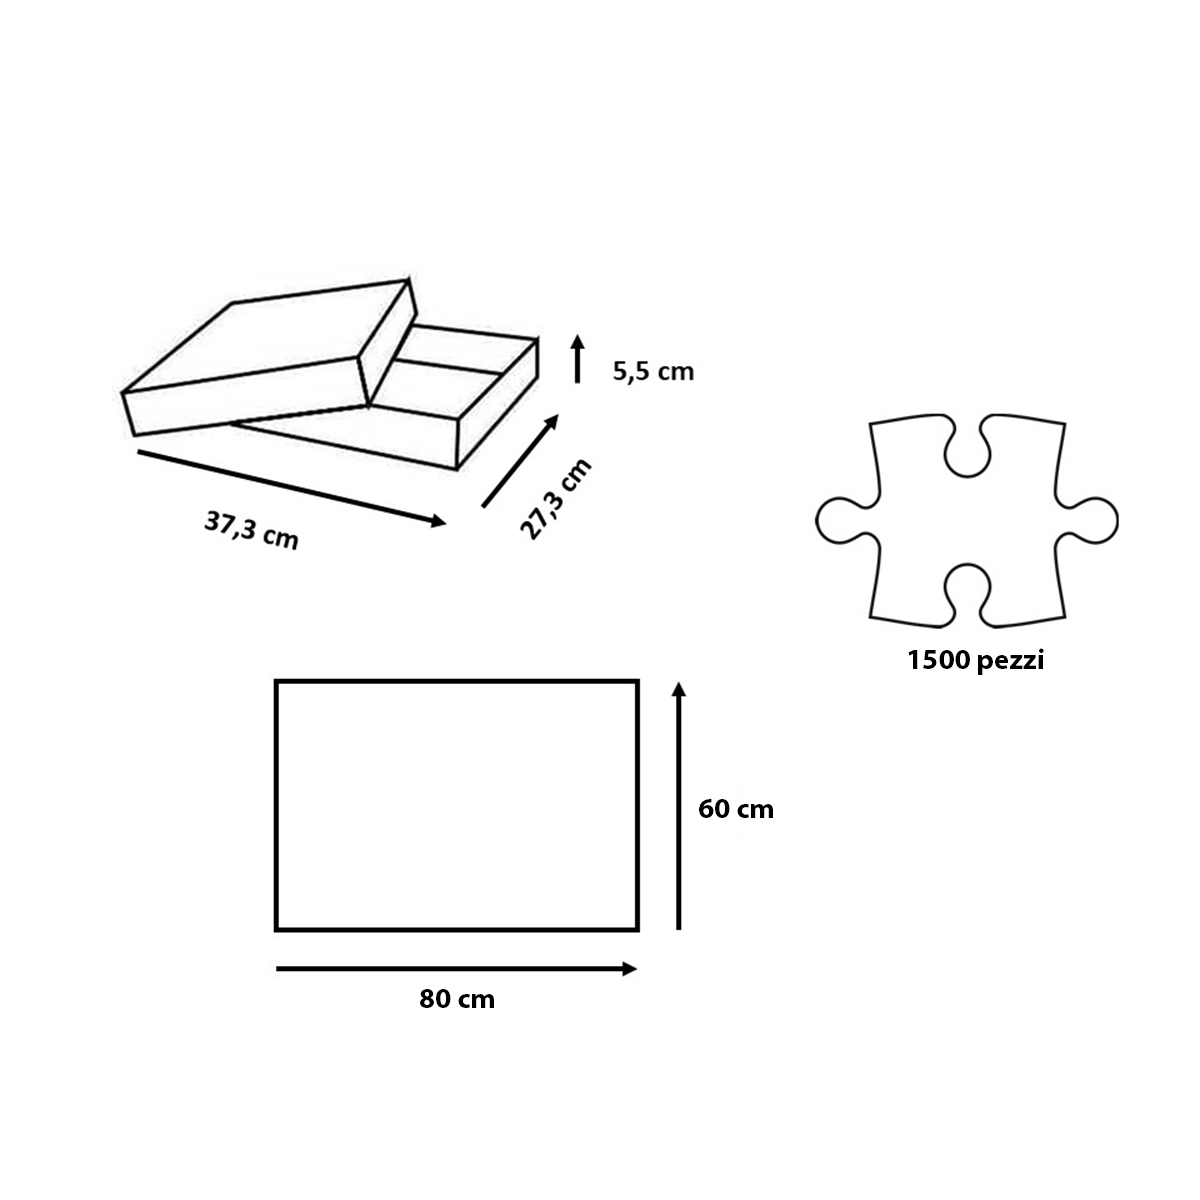 Ravensburger puzzle per adulti - 1500 pezzi - cinque terre romance - dimensione  puzzle: 80x60 cm. - Toys Center